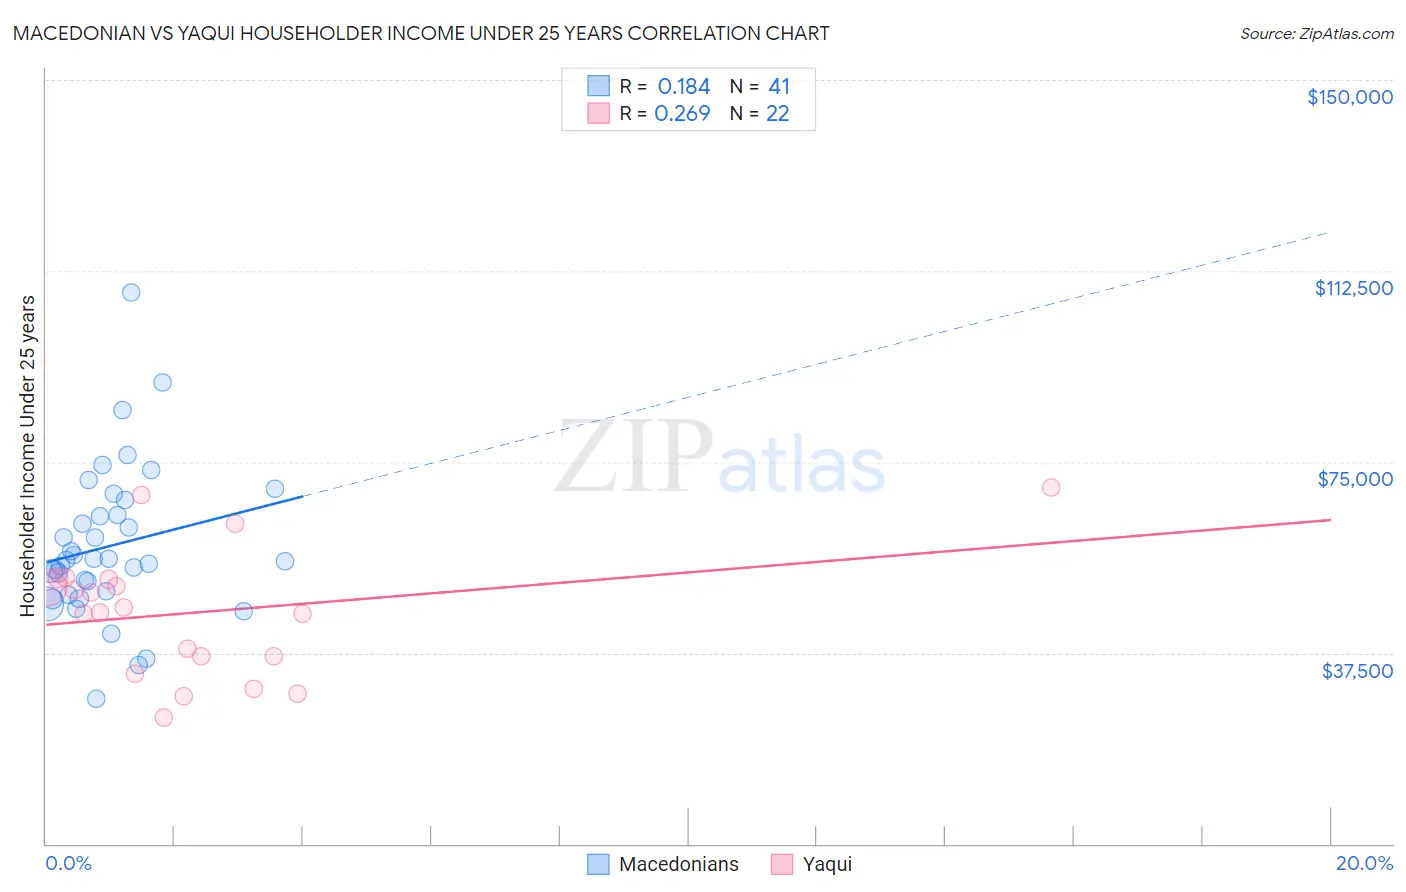 Macedonian vs Yaqui Householder Income Under 25 years